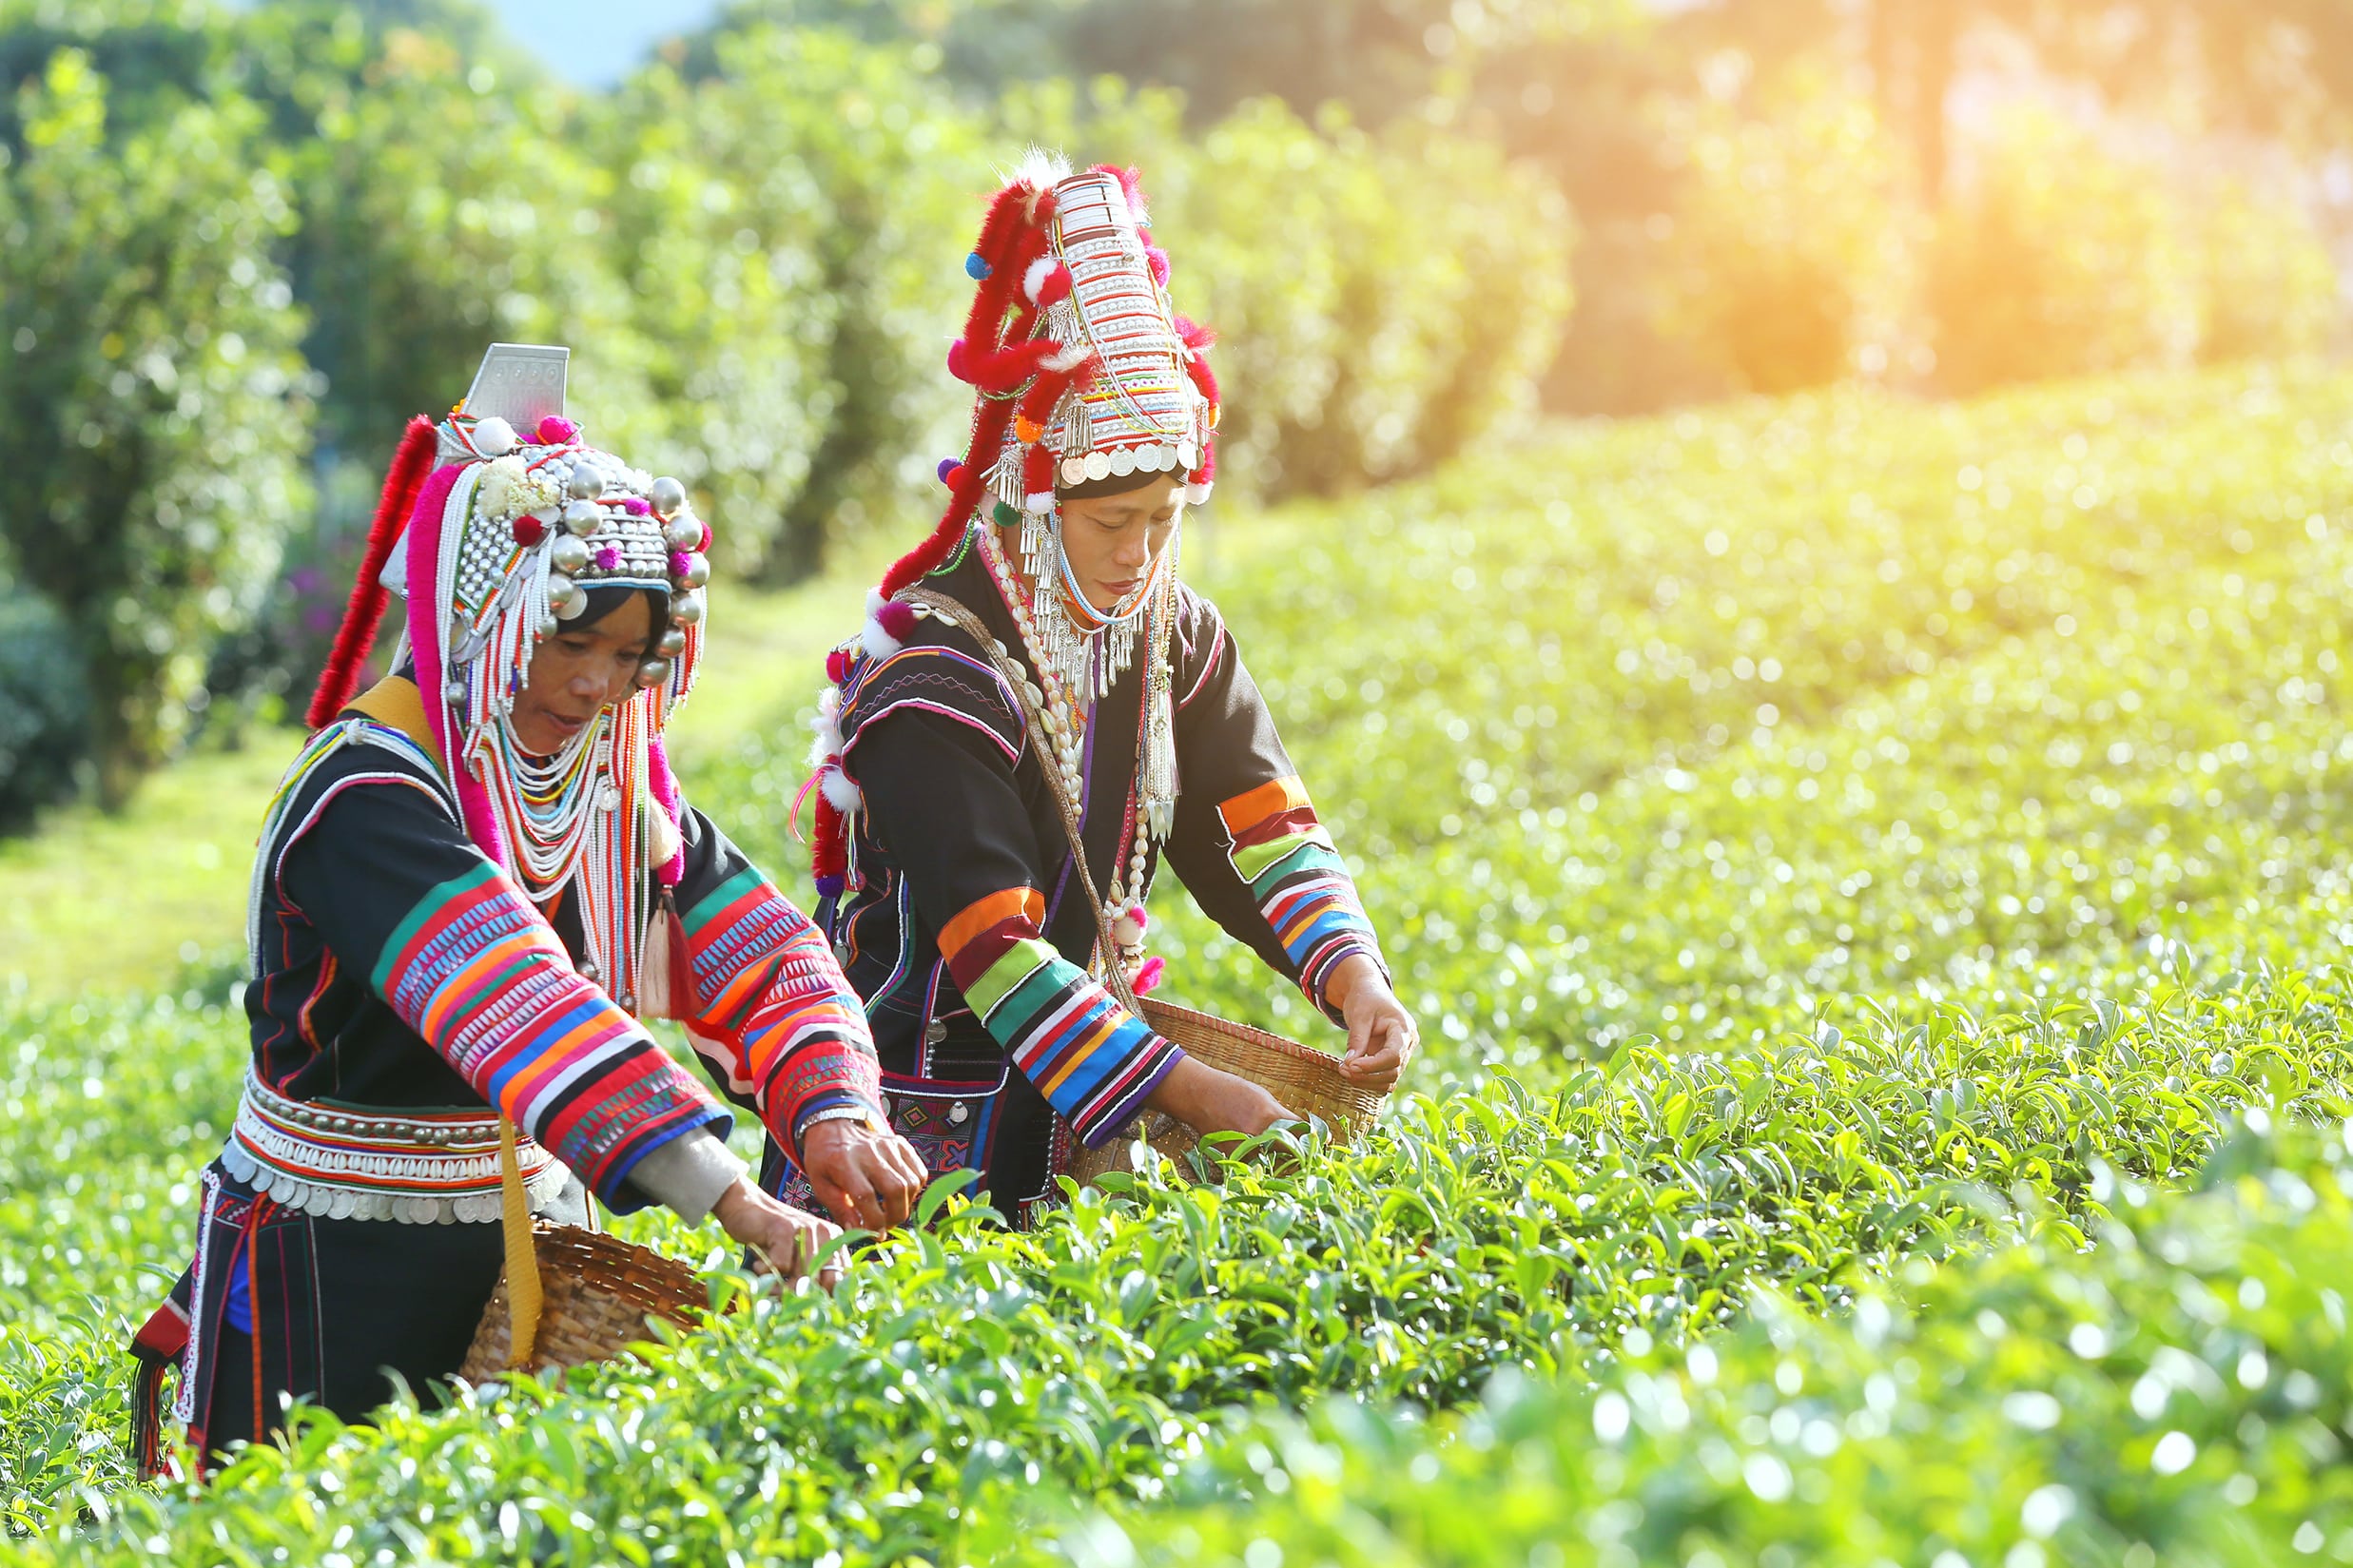 Two women working in a field in traditional dress